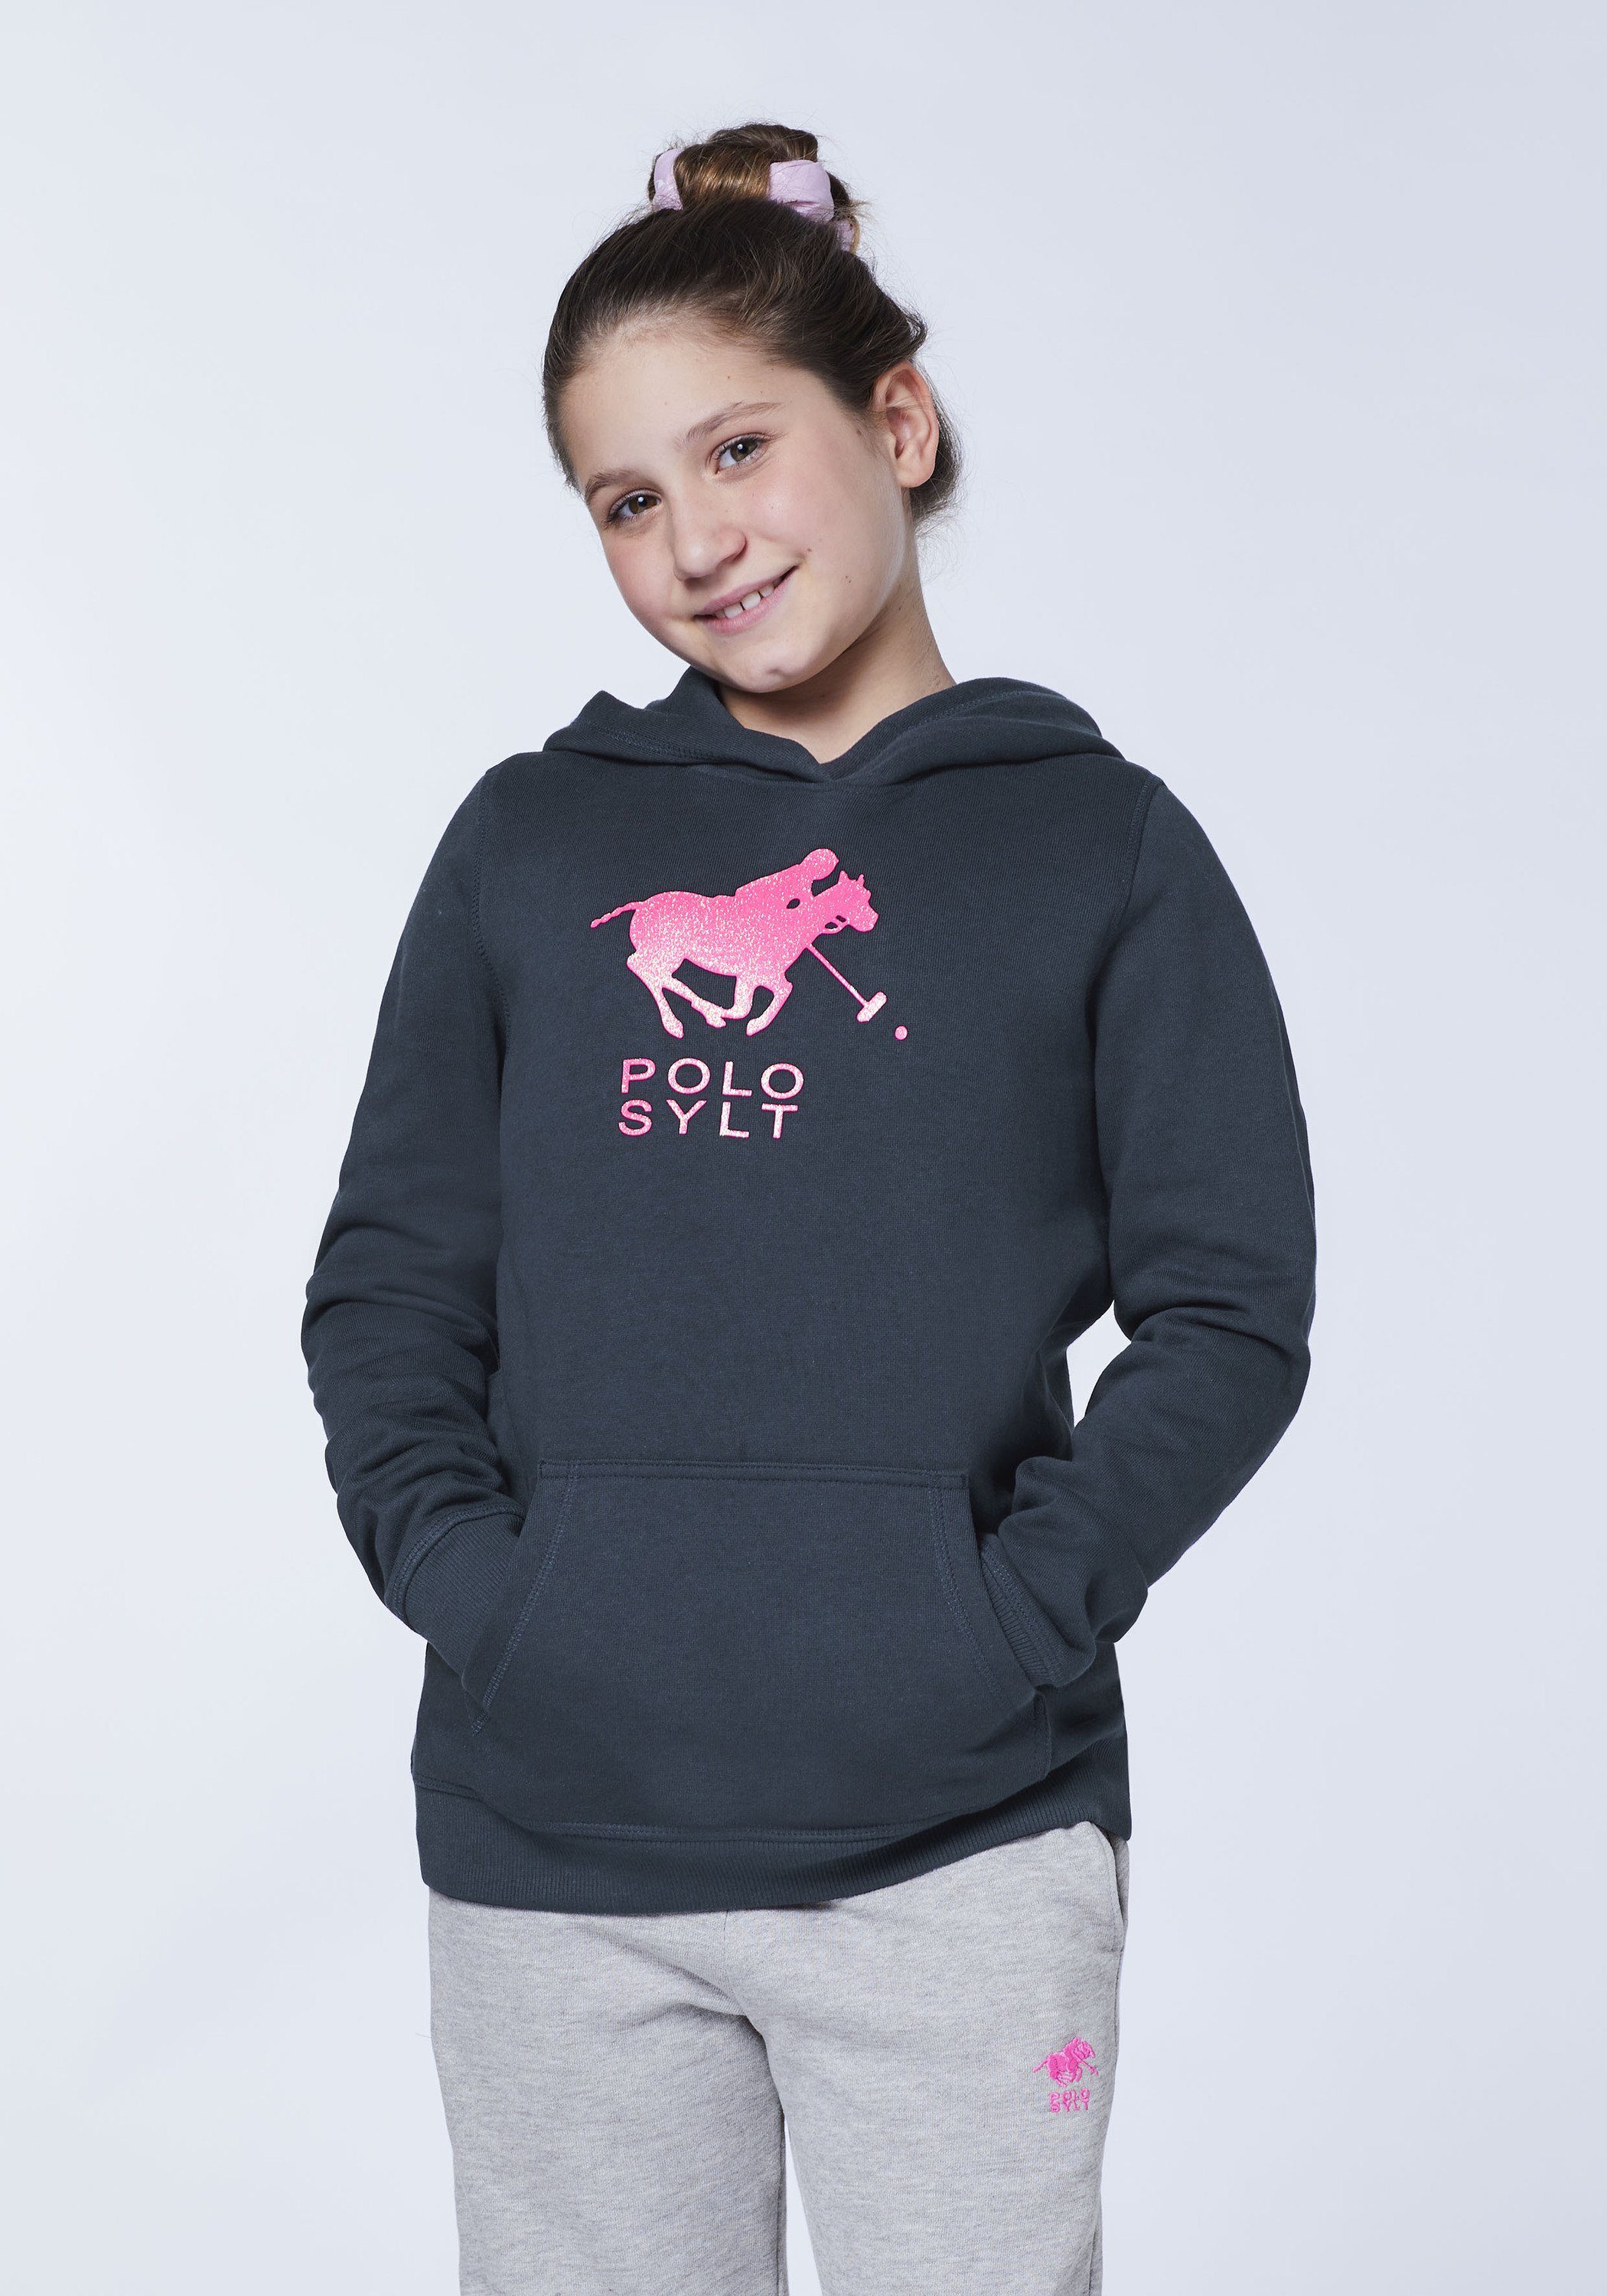 Polo Sylt Sweatshirt mit Label-Motiv glitzerndem Eclipse Total